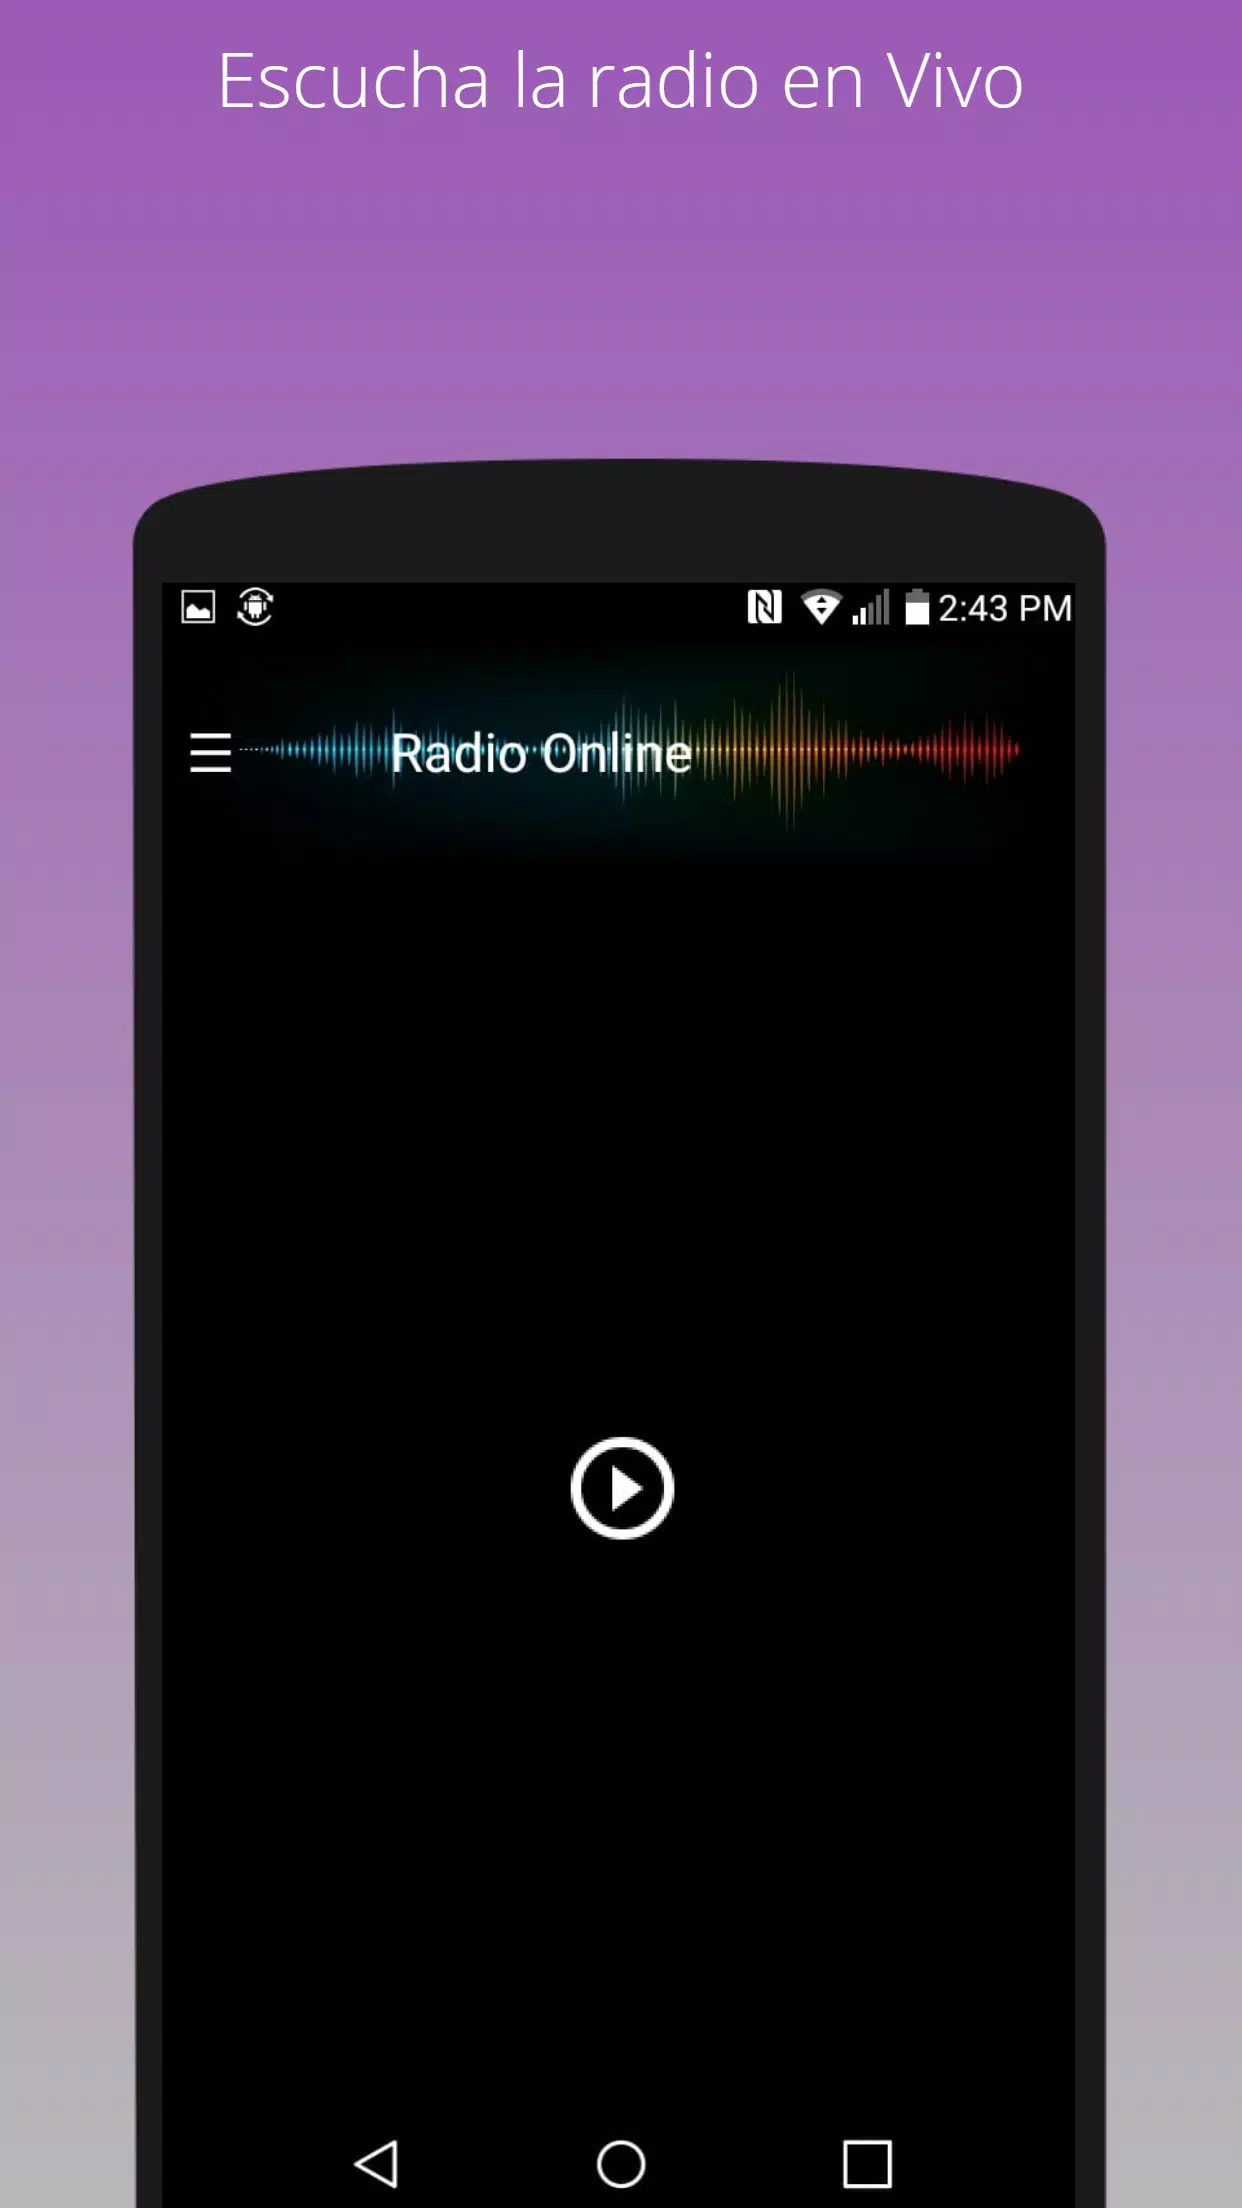 Radio Rock and Pop 94.1 FM en vivo emisora chilena APK for Android Download